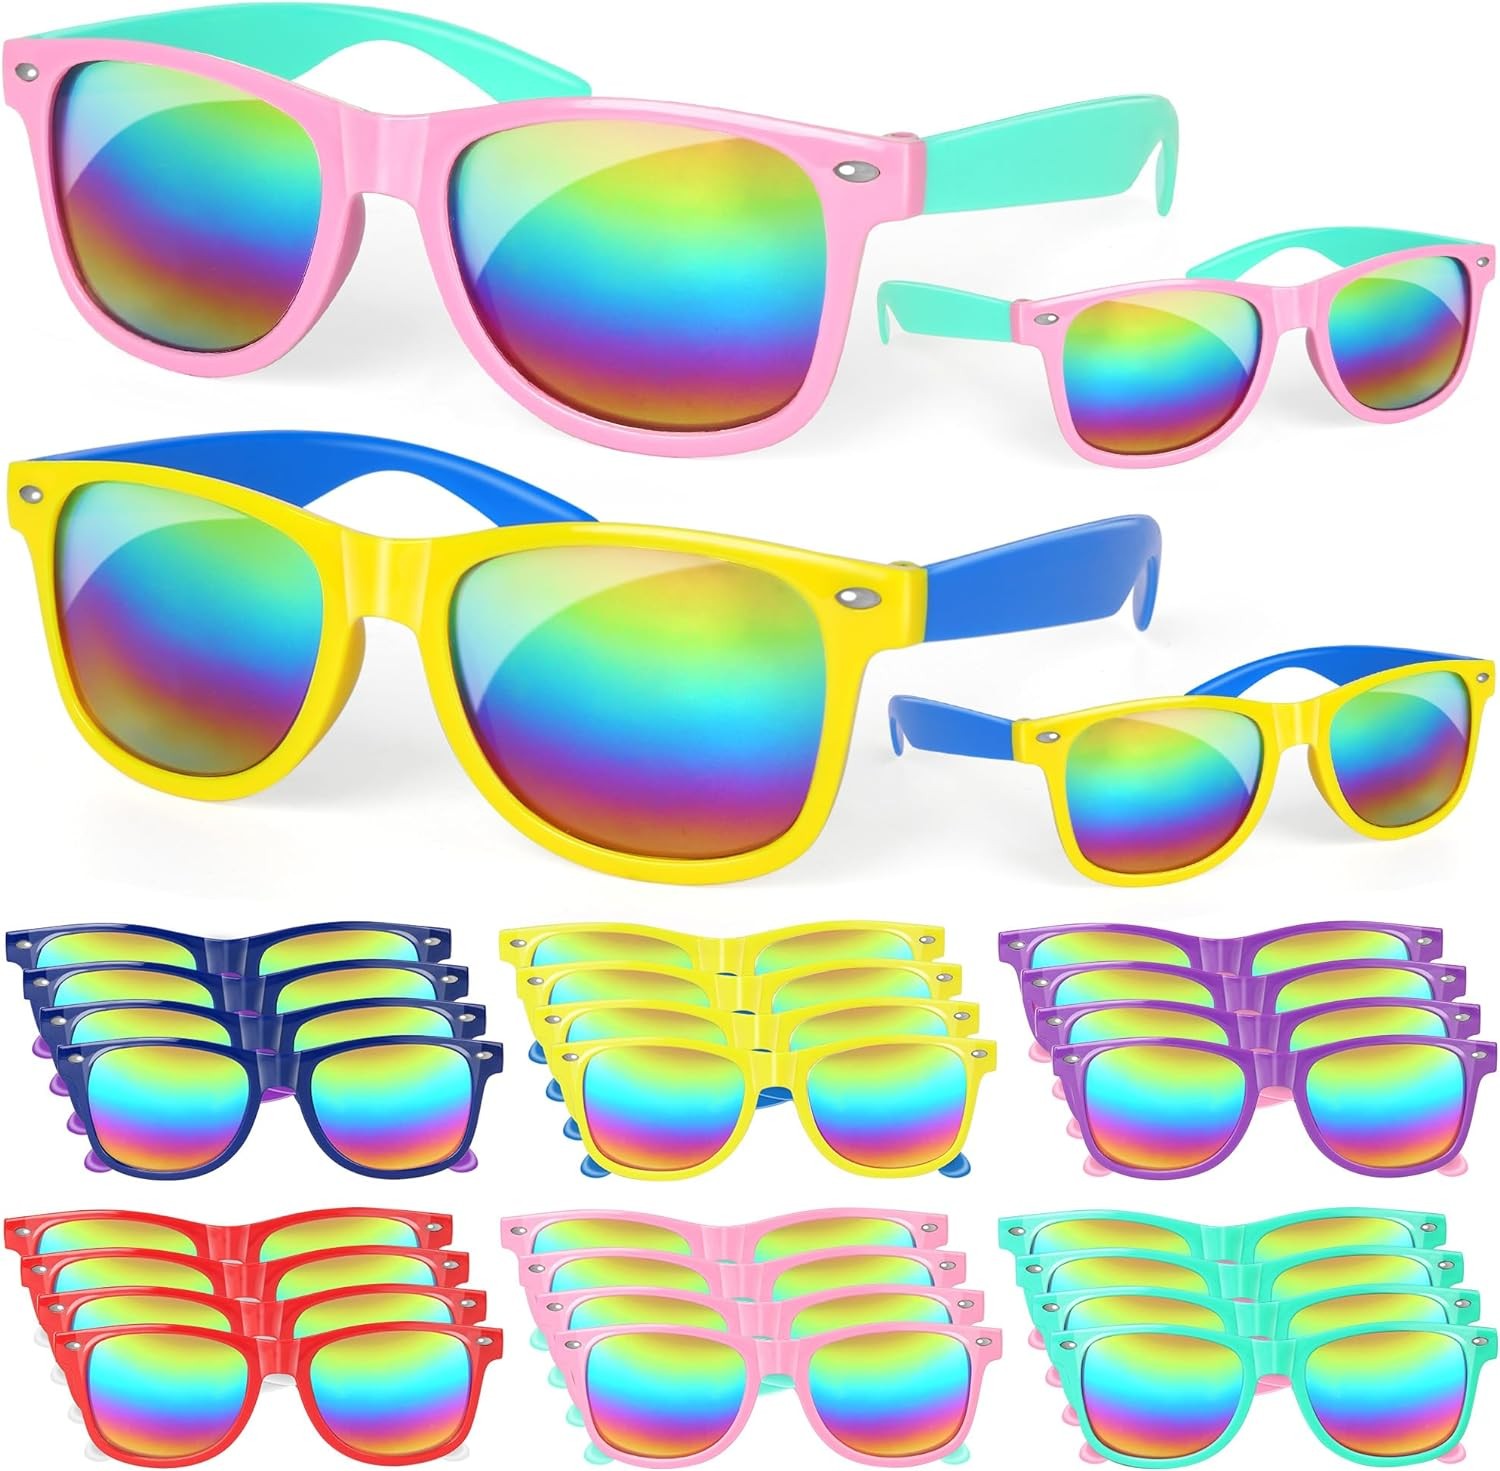 Beach Themed Sunglasses